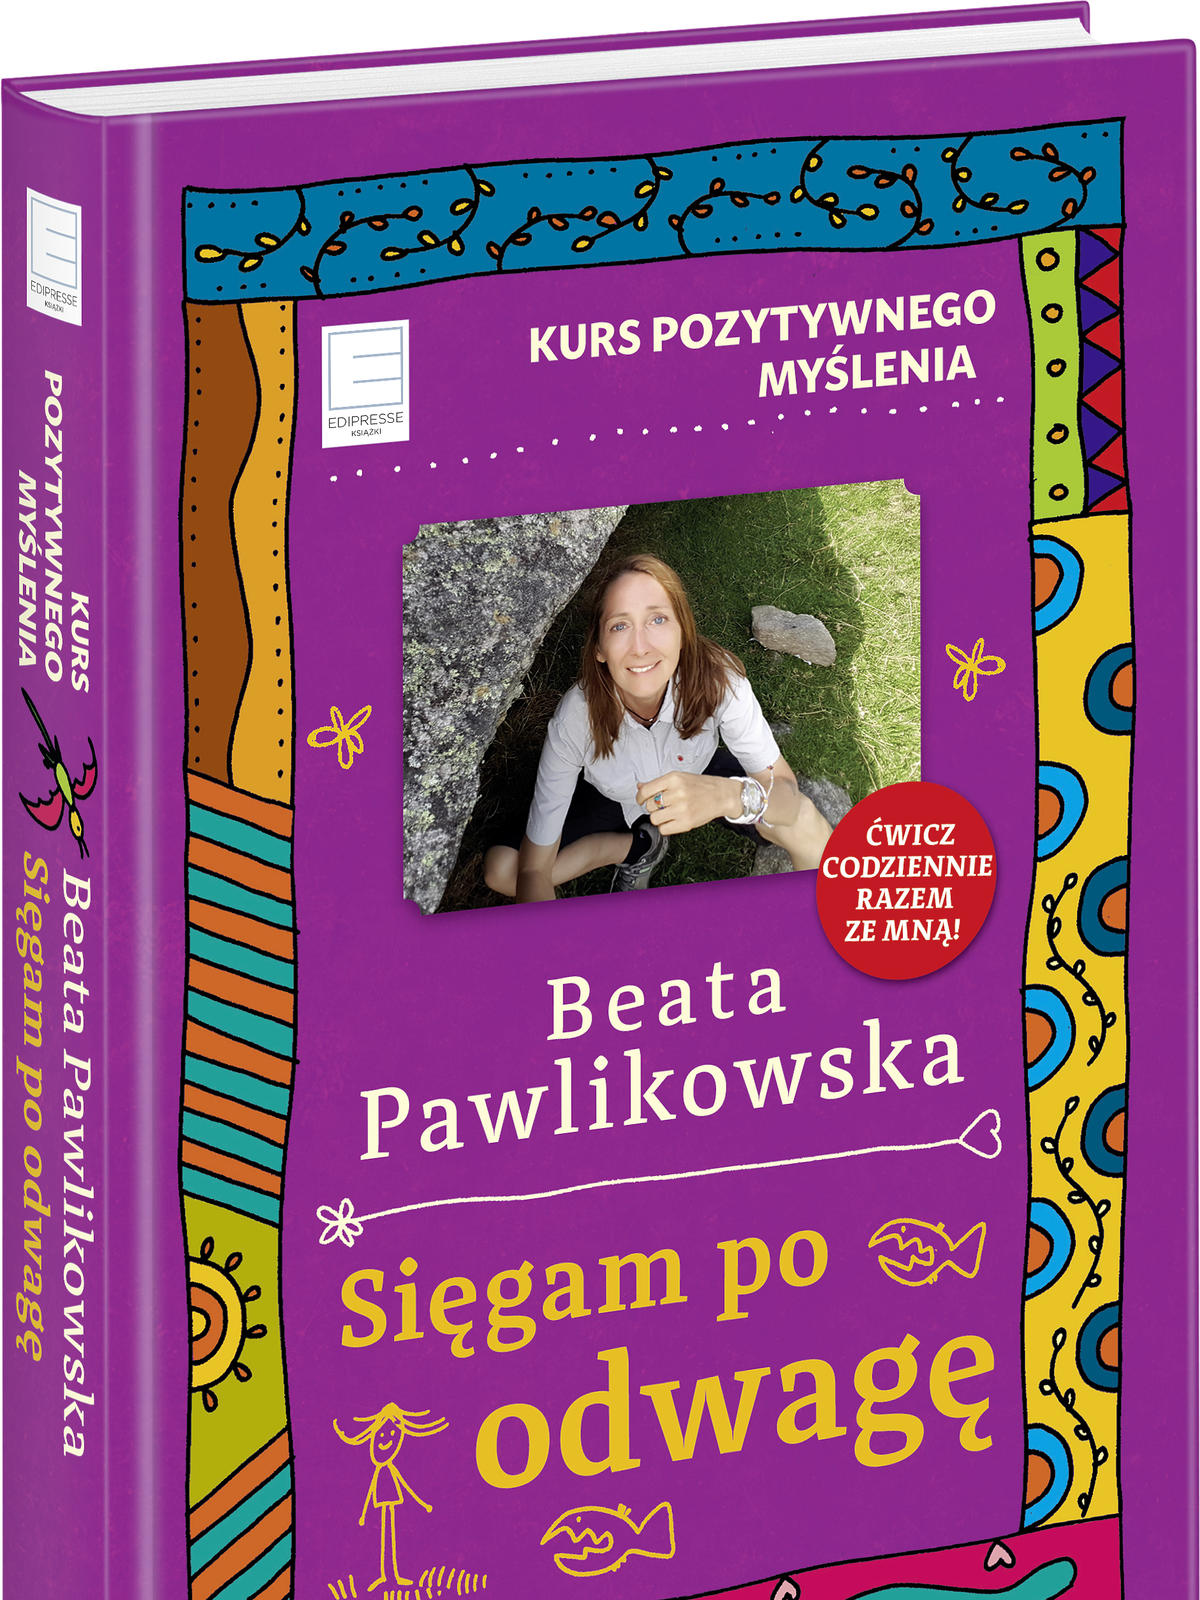 Beata Pawlikowska, 